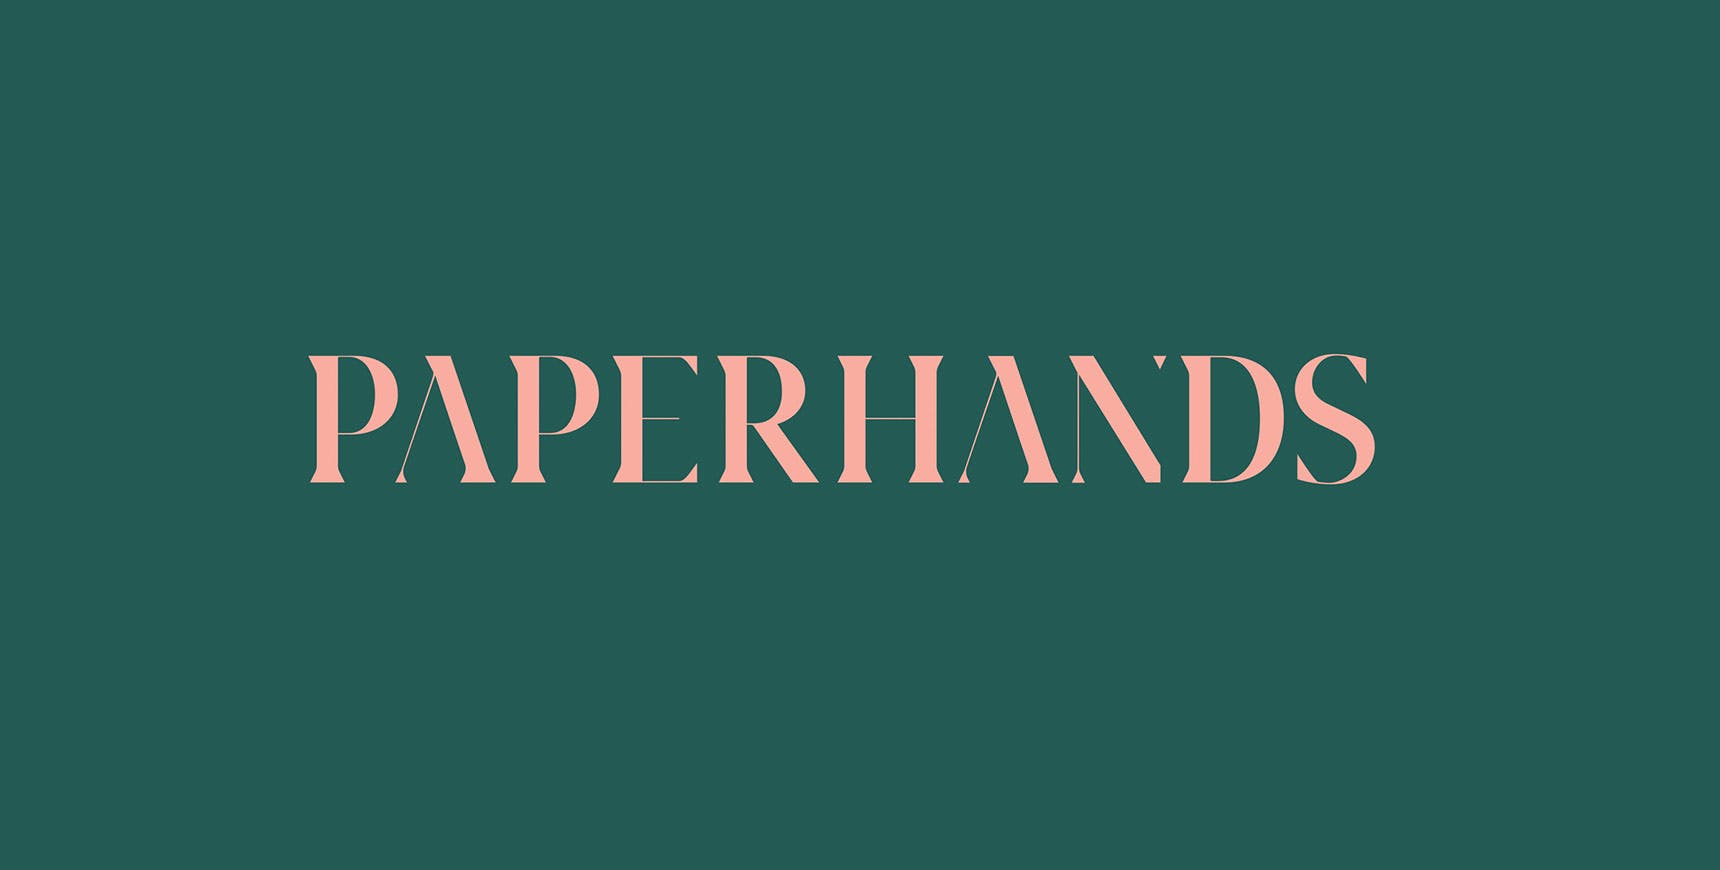 Paperhands Wallpaper Logo Design